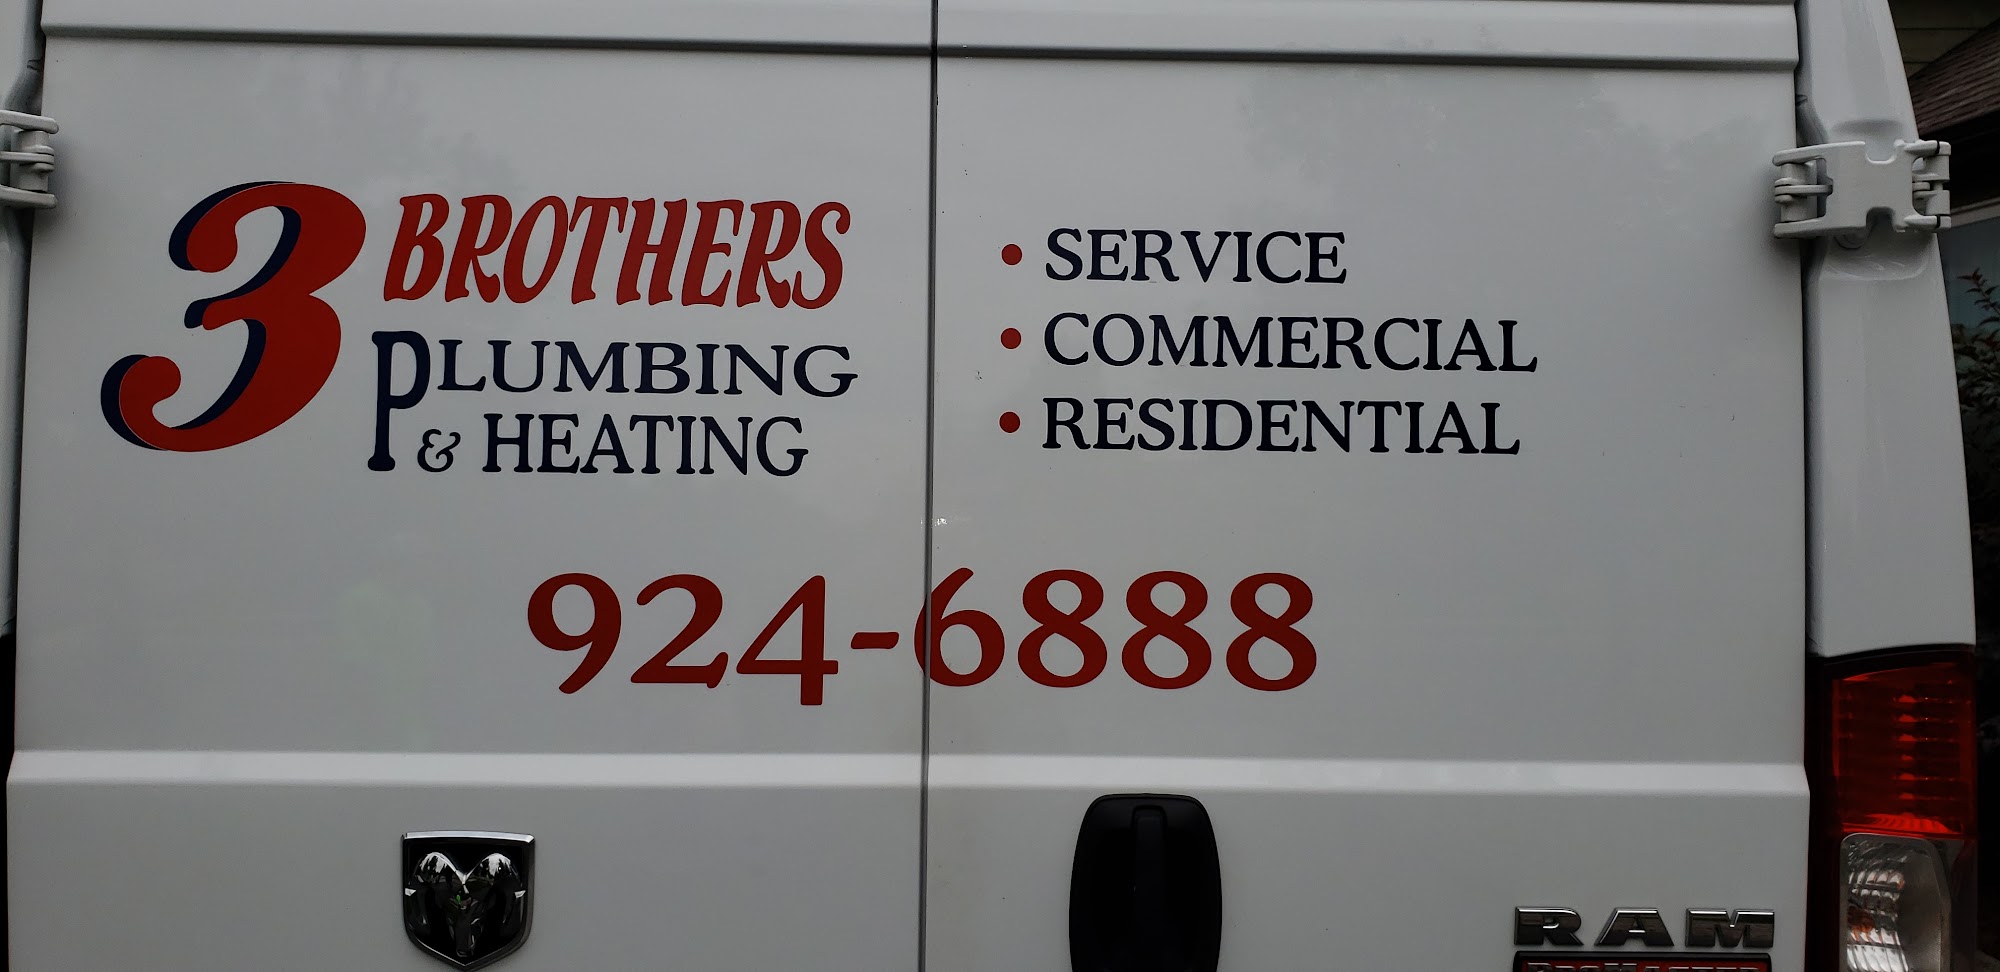 3 Brothers Plumbing & Heating